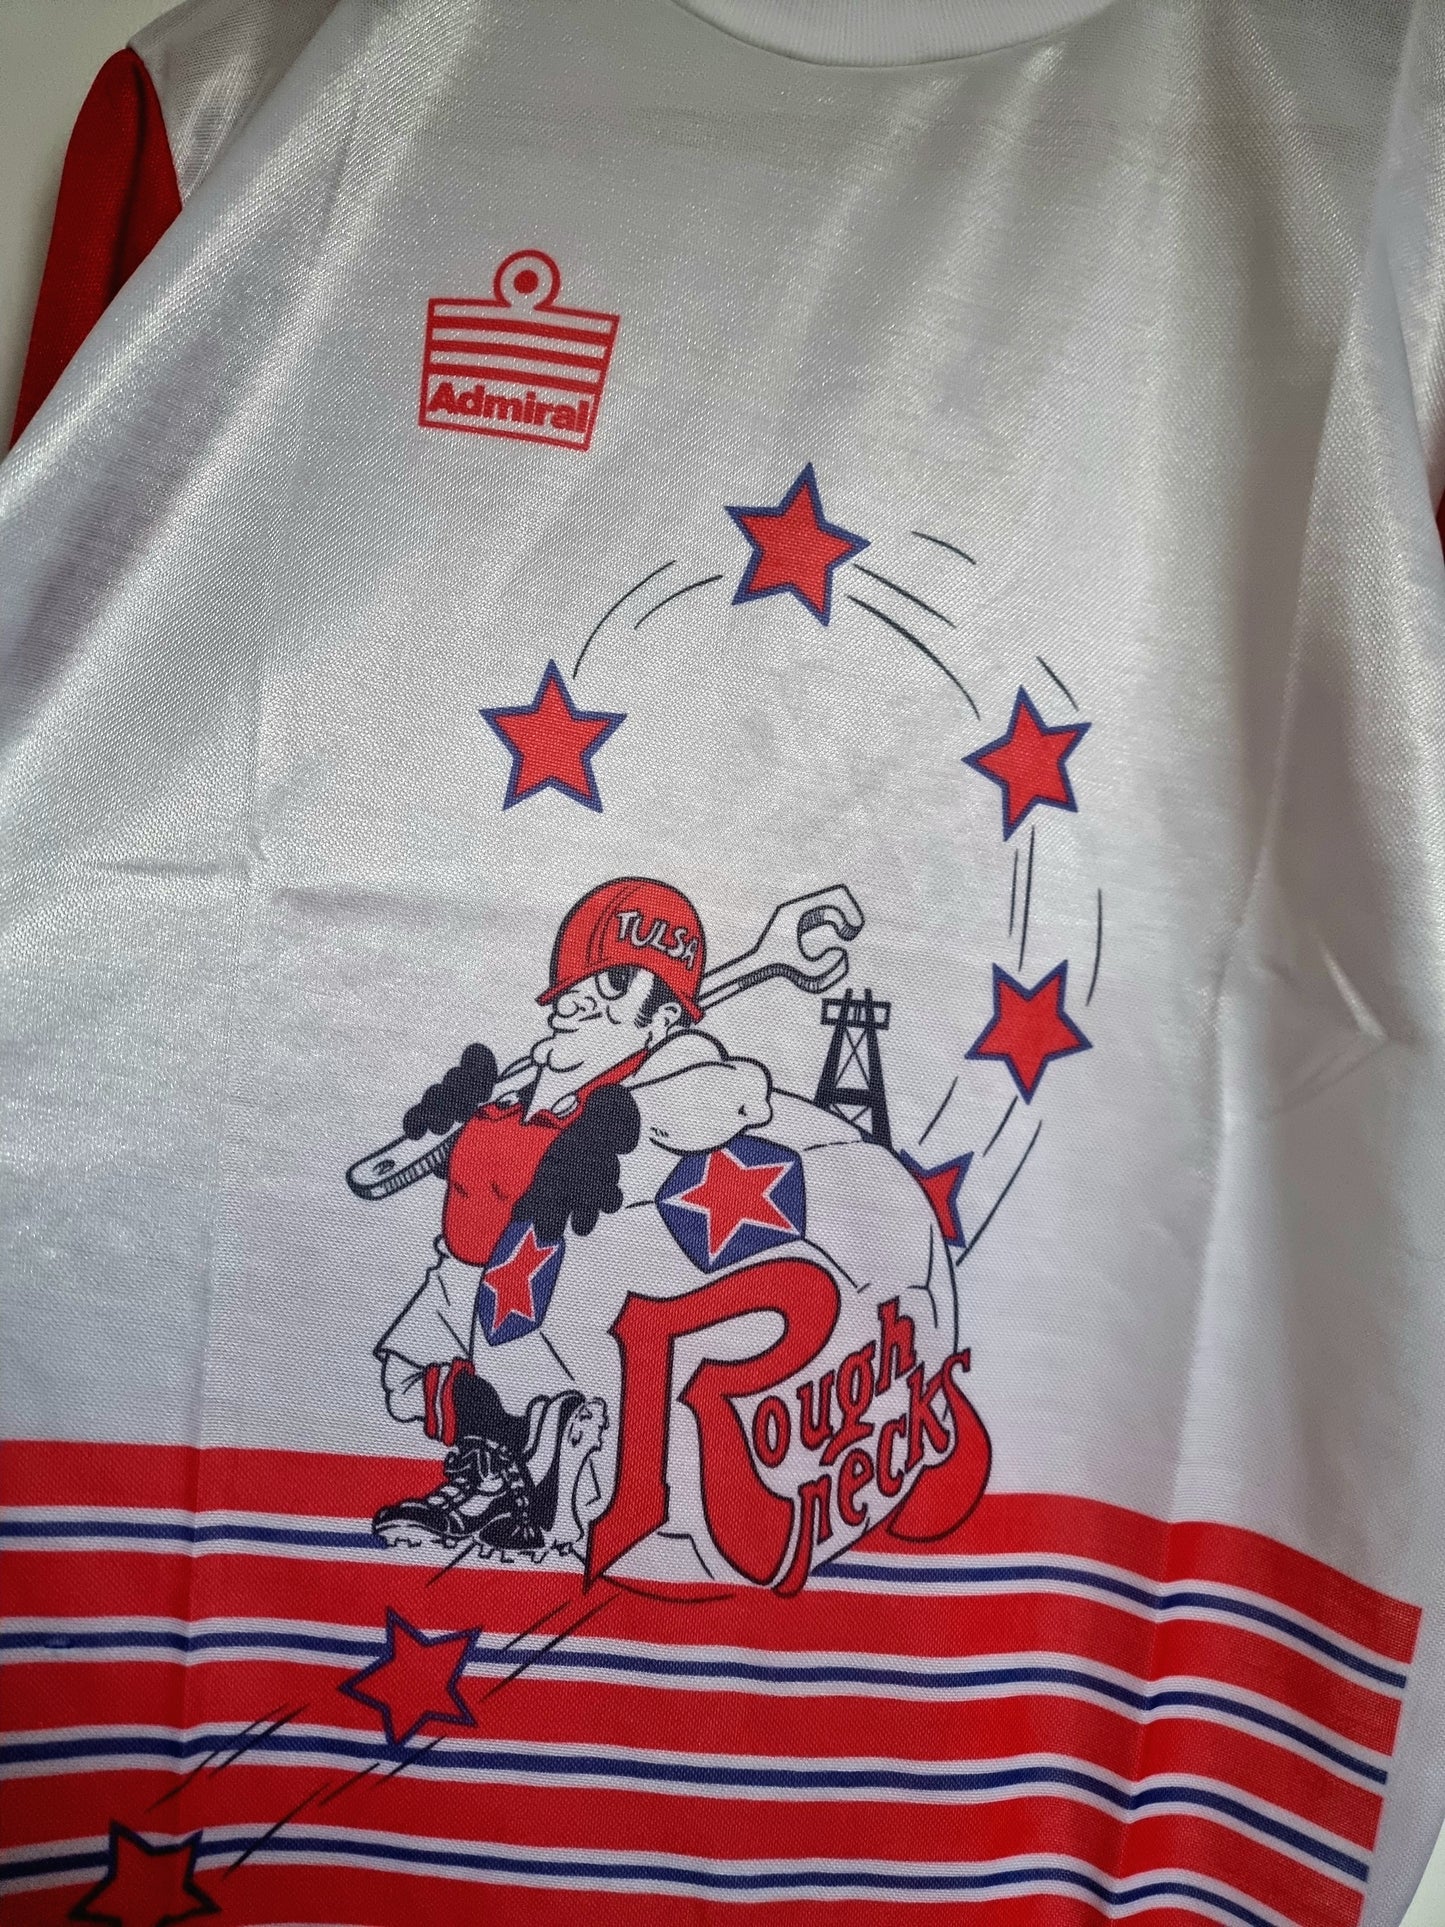 Admiral Tulsa Roughnecks 80s Leisure T- Shirt Medium